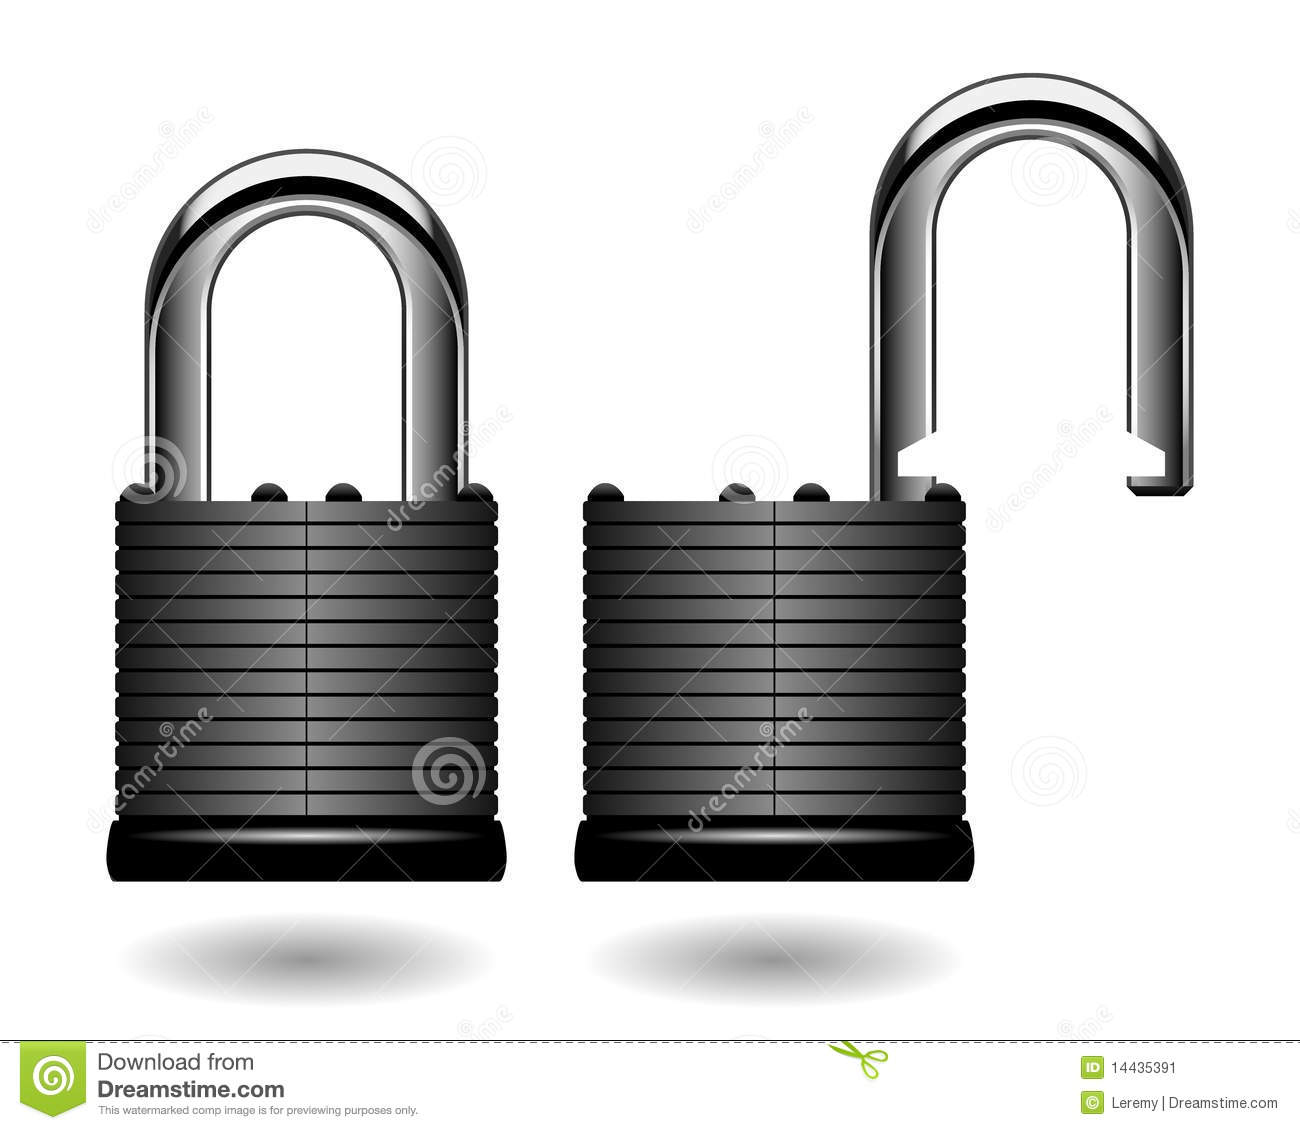 Locked And Unlocked Pad Lock In